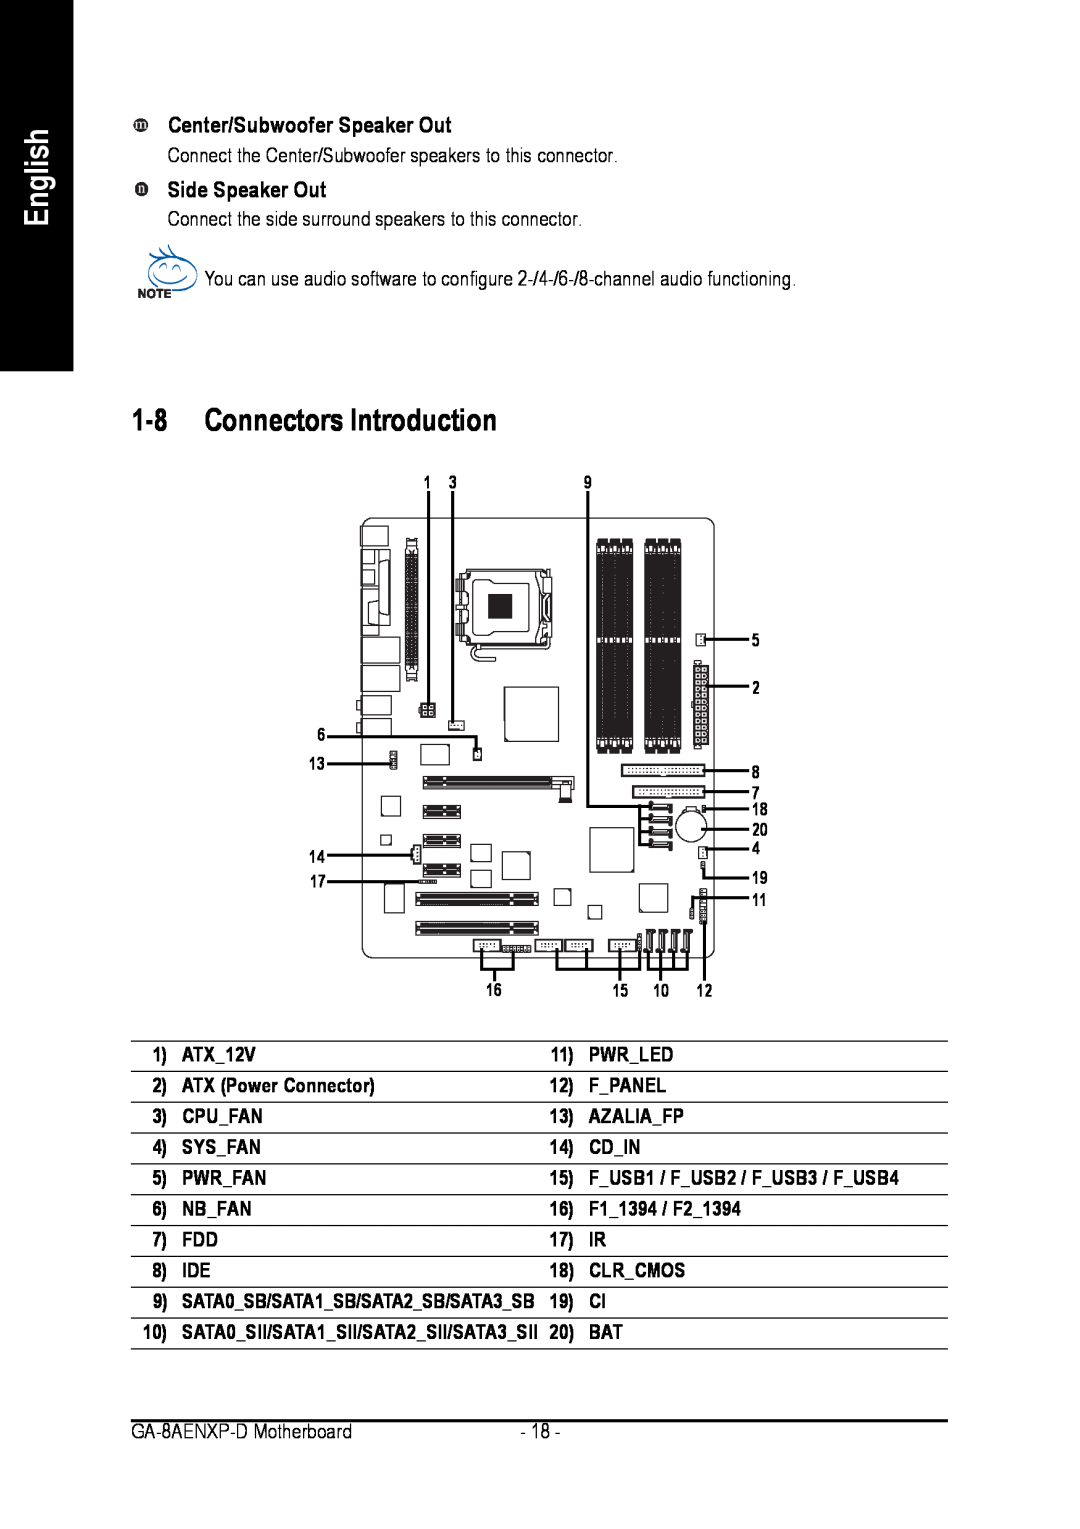 Gigabyte GA-8AENXP-D user manual Connectors Introduction, Center/Subwoofer Speaker Out, Side Speaker Out, English 